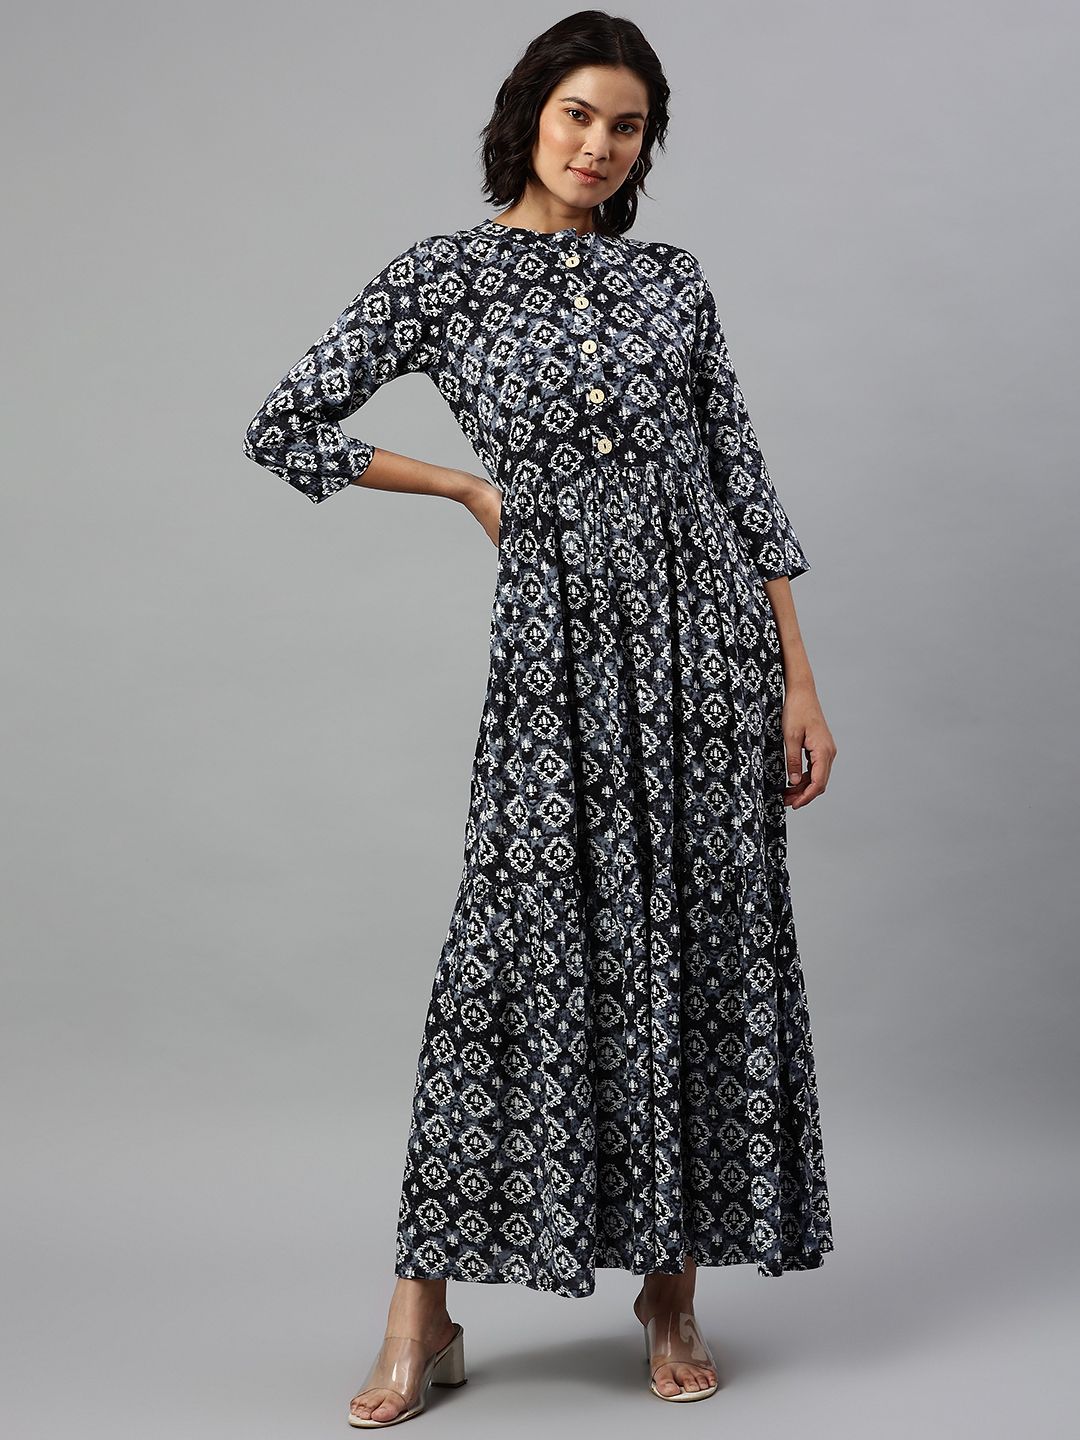 Cottinfab Grey & White Ethnic Motifs Maxi Dress Price in India